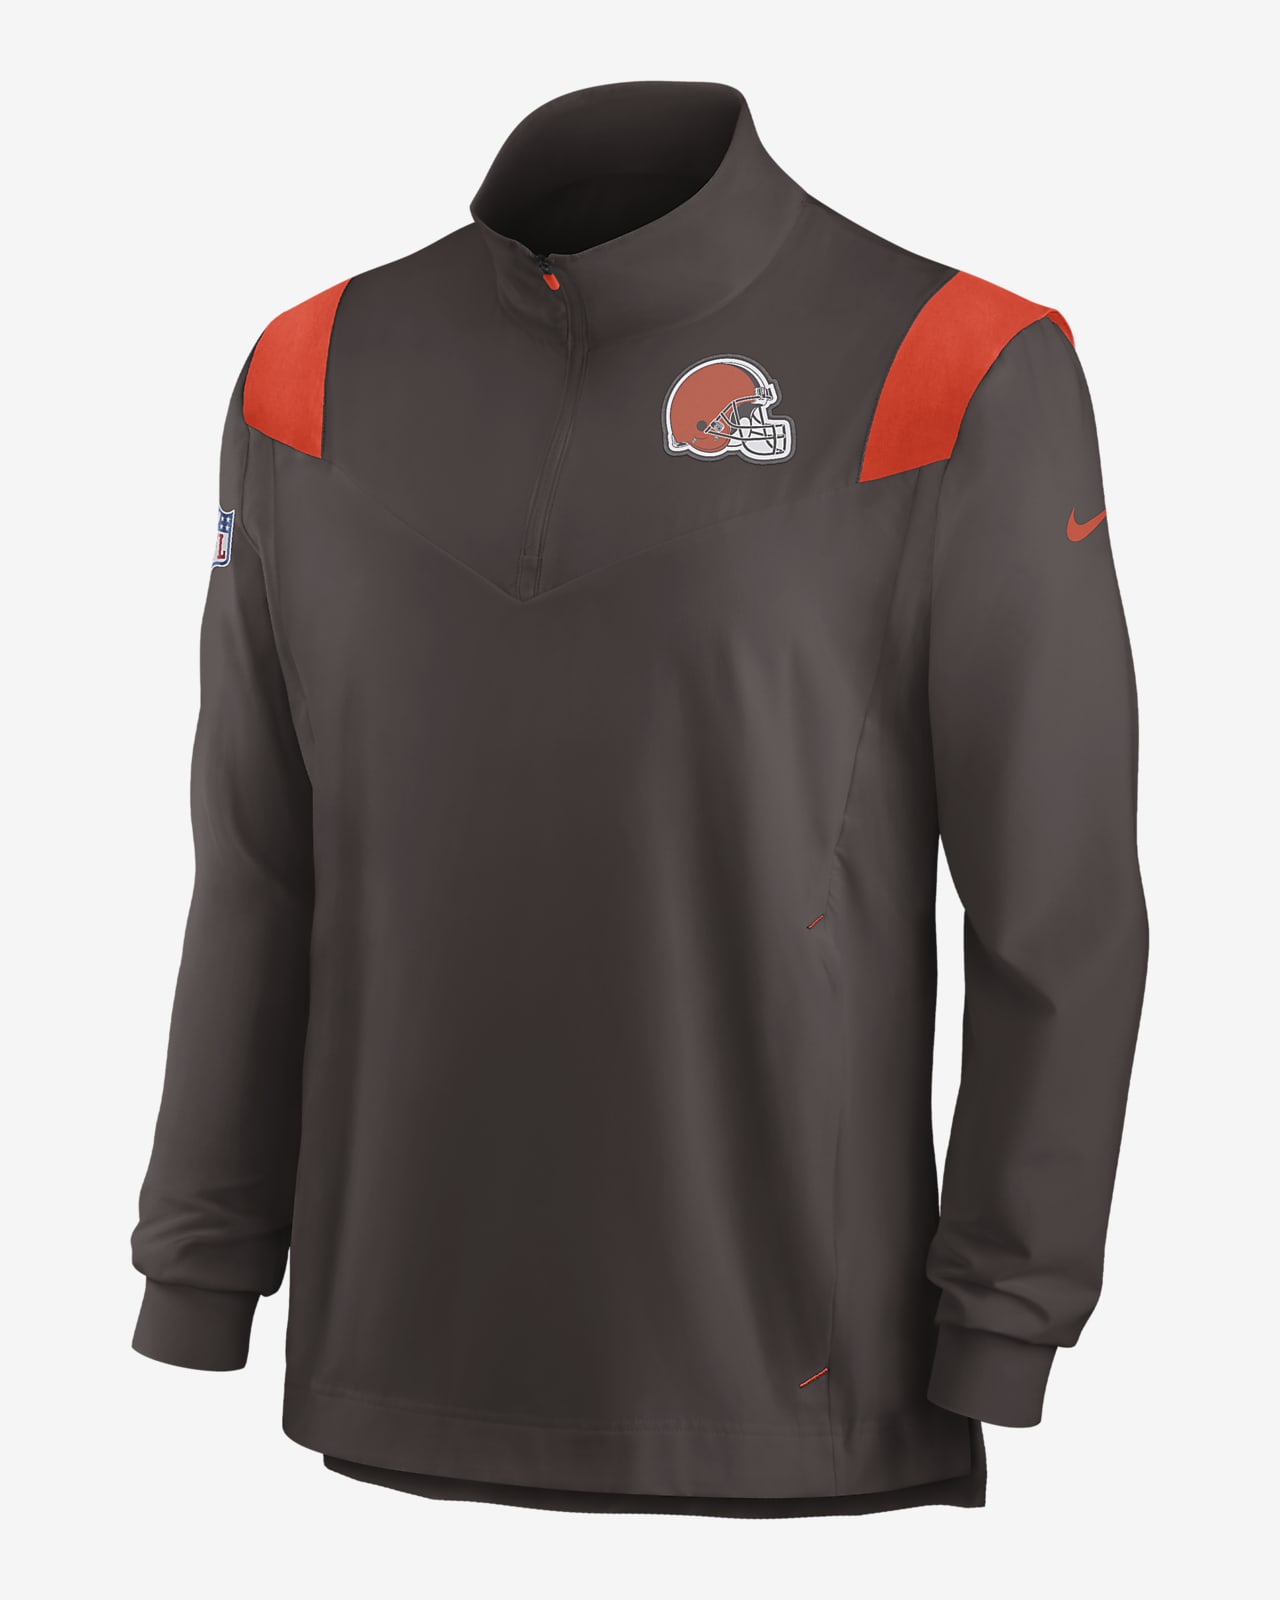 Nike Repel Coach (NFL Cleveland Browns) Men's 1/4-Zip Jacket